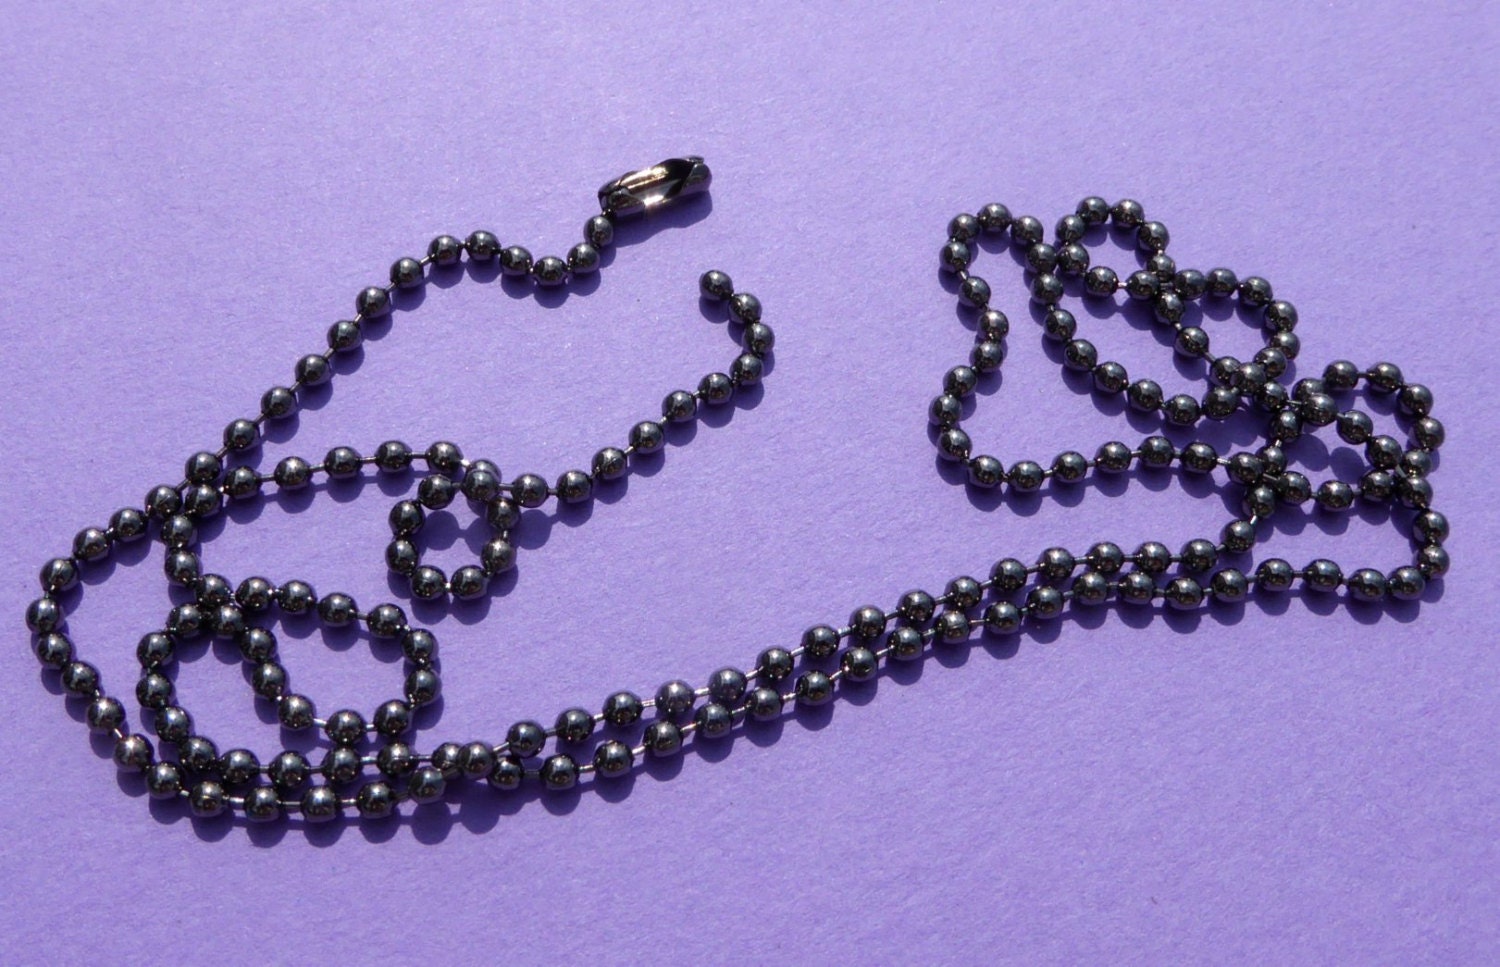 Gunmetal Ball Chain Necklaces - 24 inch - 2.4mm Diameter - Set of 10 - Gray Dark Silver Colored